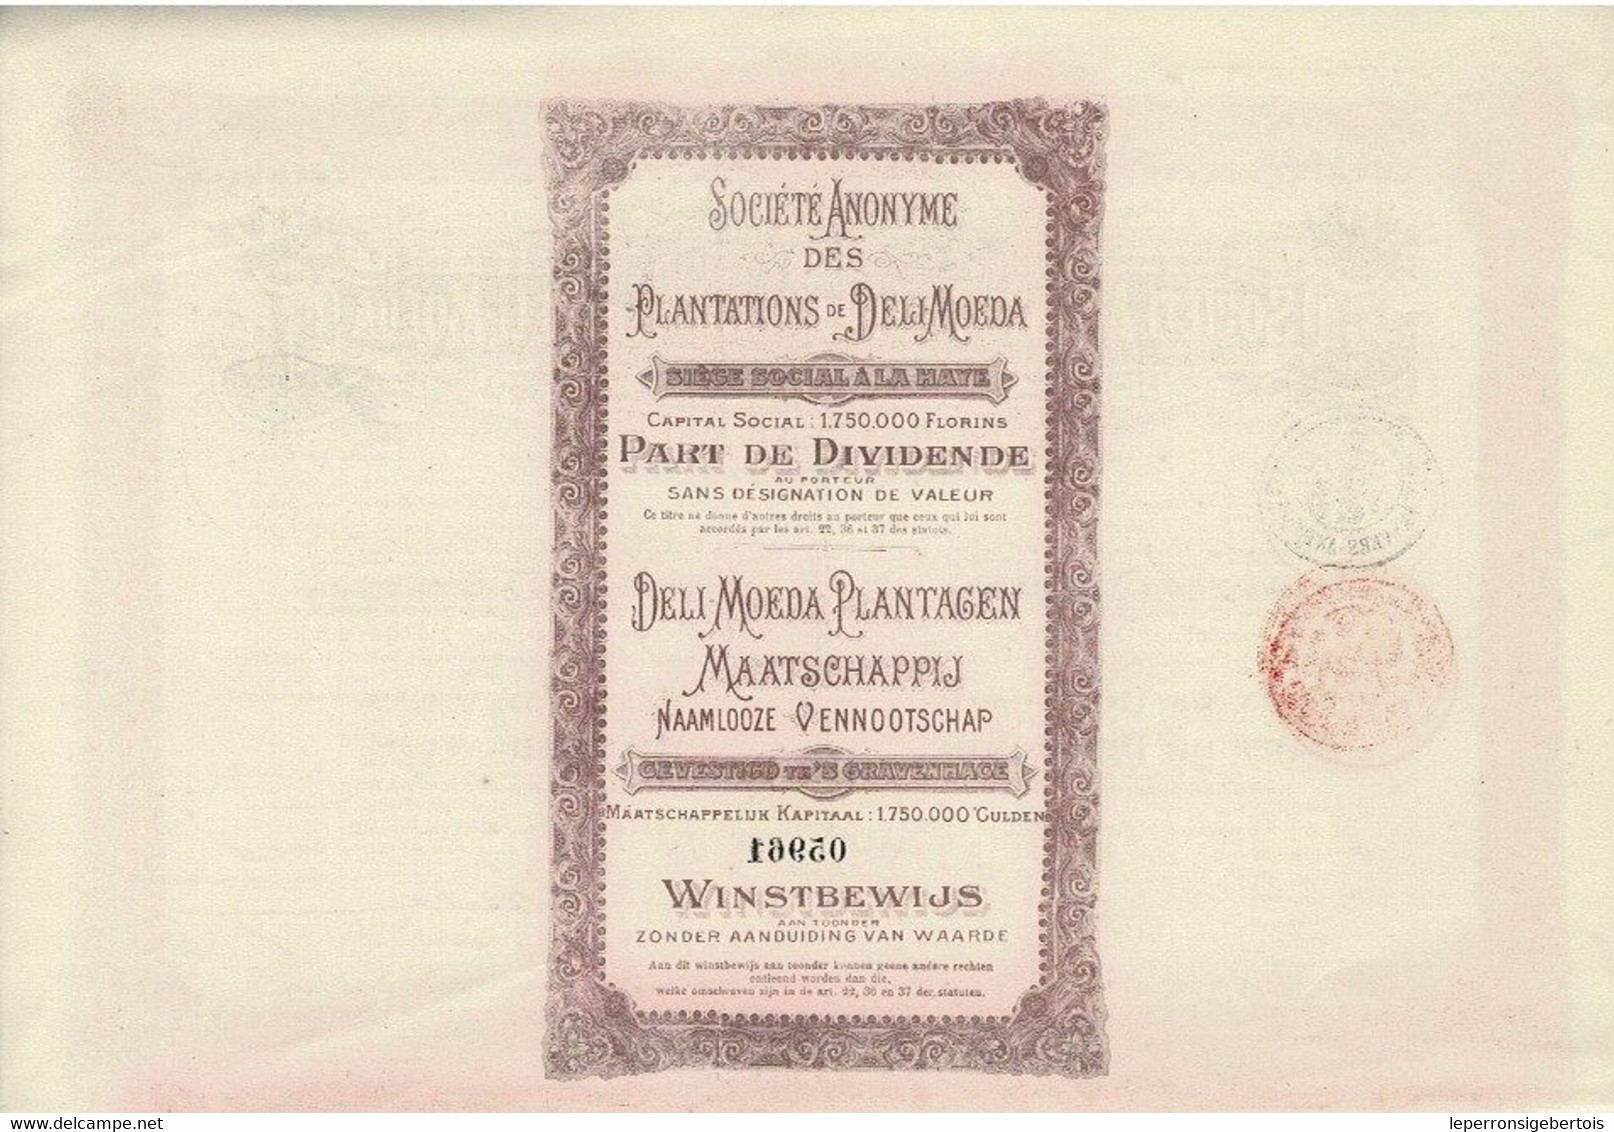 Titre De 1910 - Société Anonyme Des Plantations De Deli-Moeda - Deli-Moeda Plantagen Maatschappij - - Asien